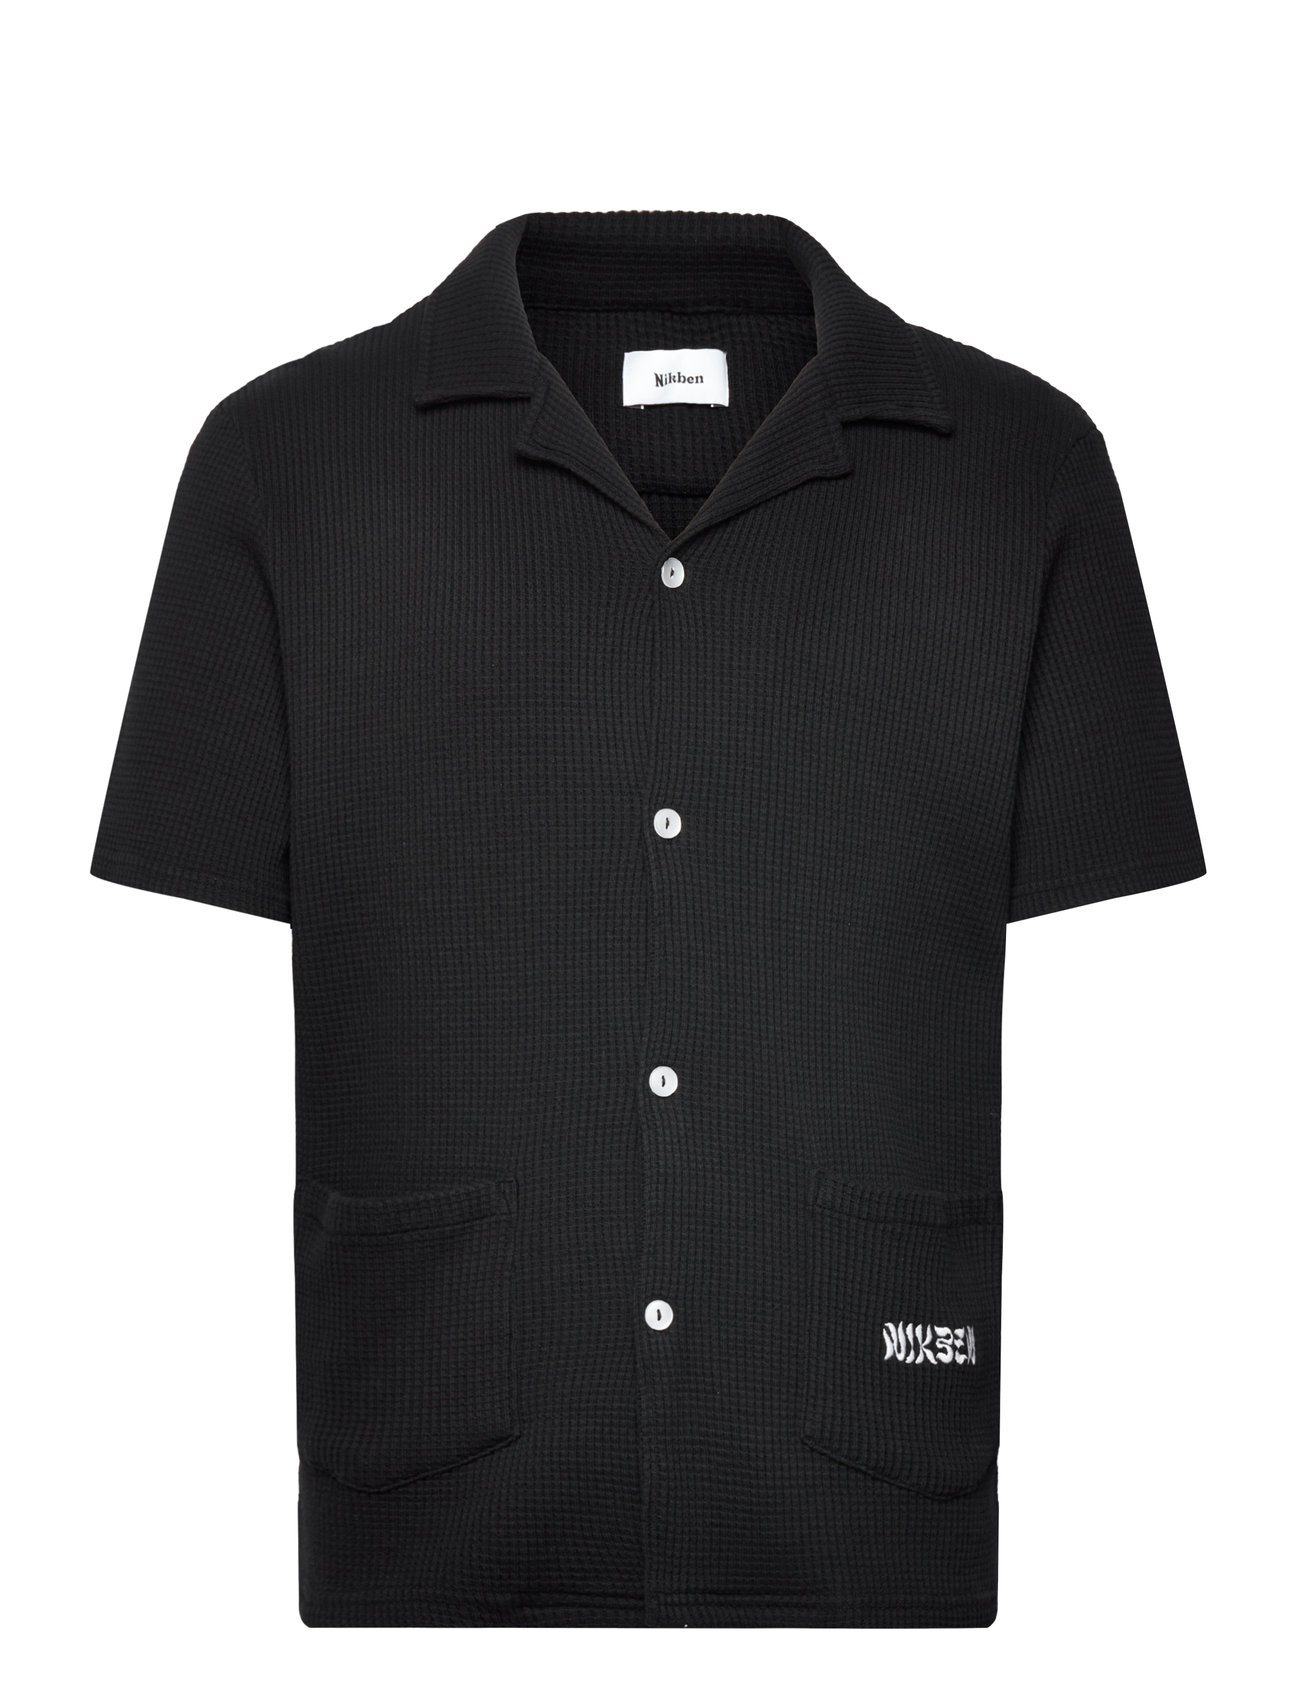 Nb Waffle Havana Shirt Black Designers Shirts Short-sleeved Black Nikben